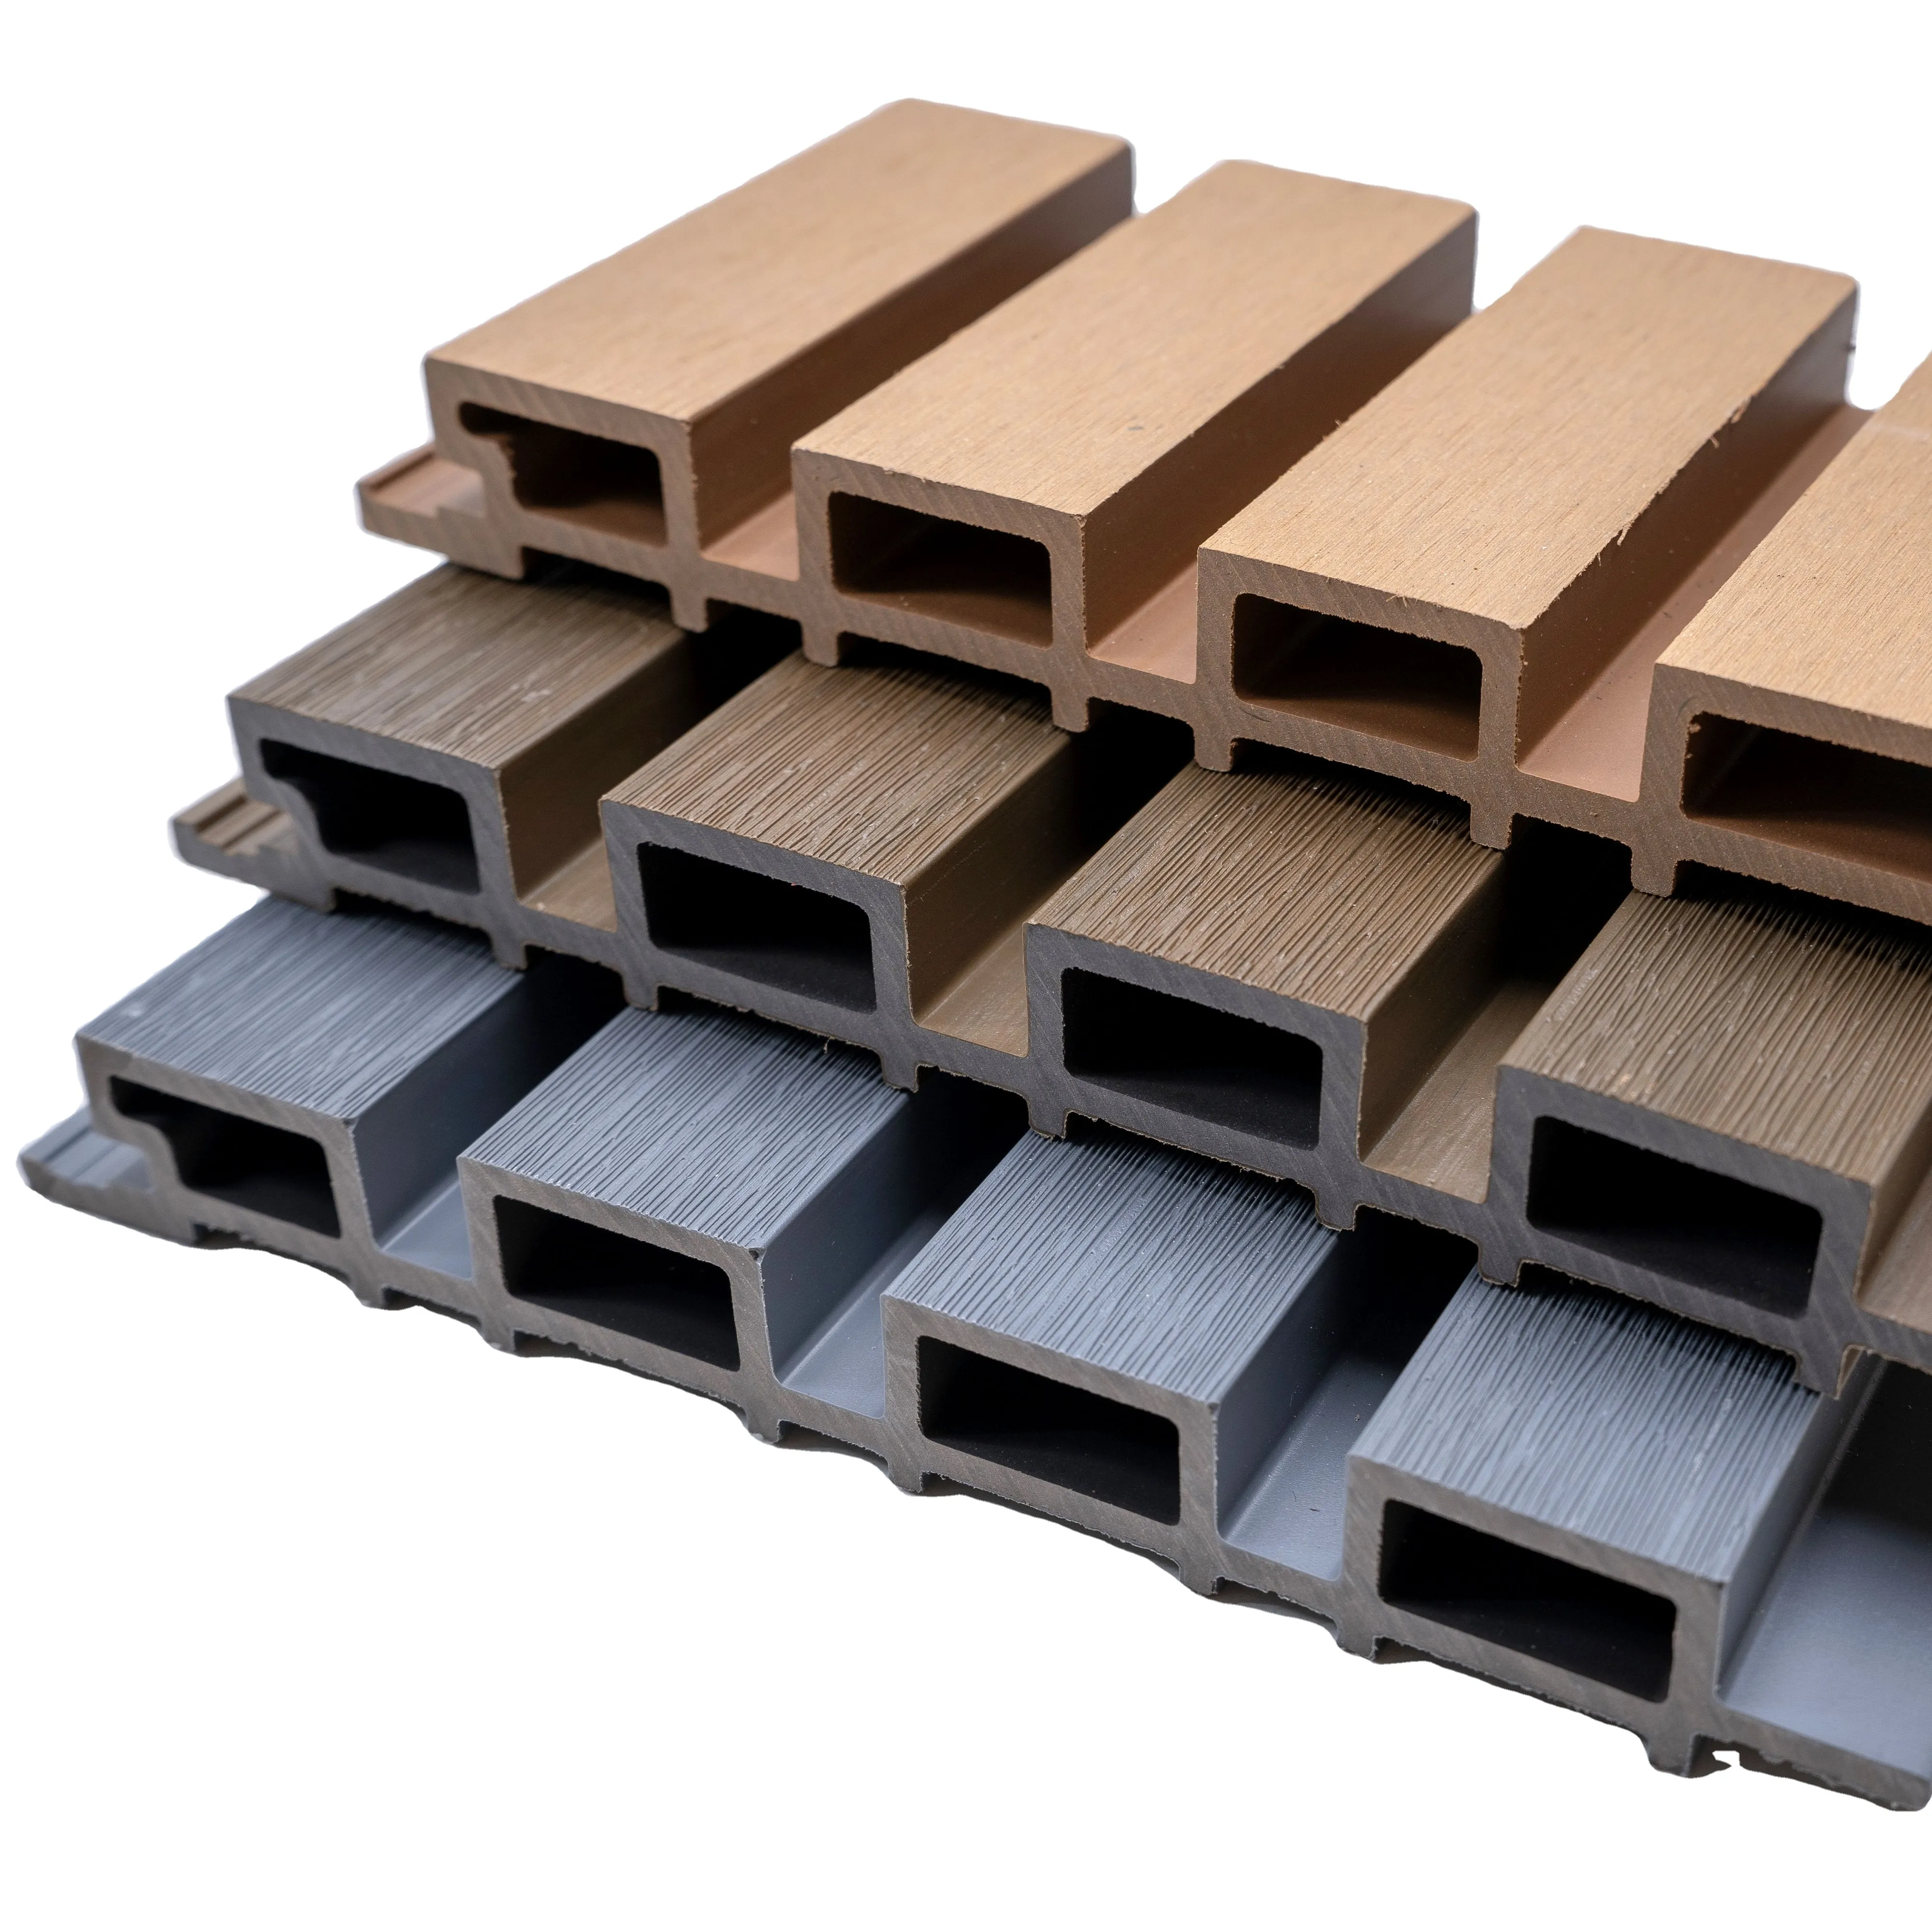 WPC decking tiles wood plastic composite floor decking panels slat panel for outdoor